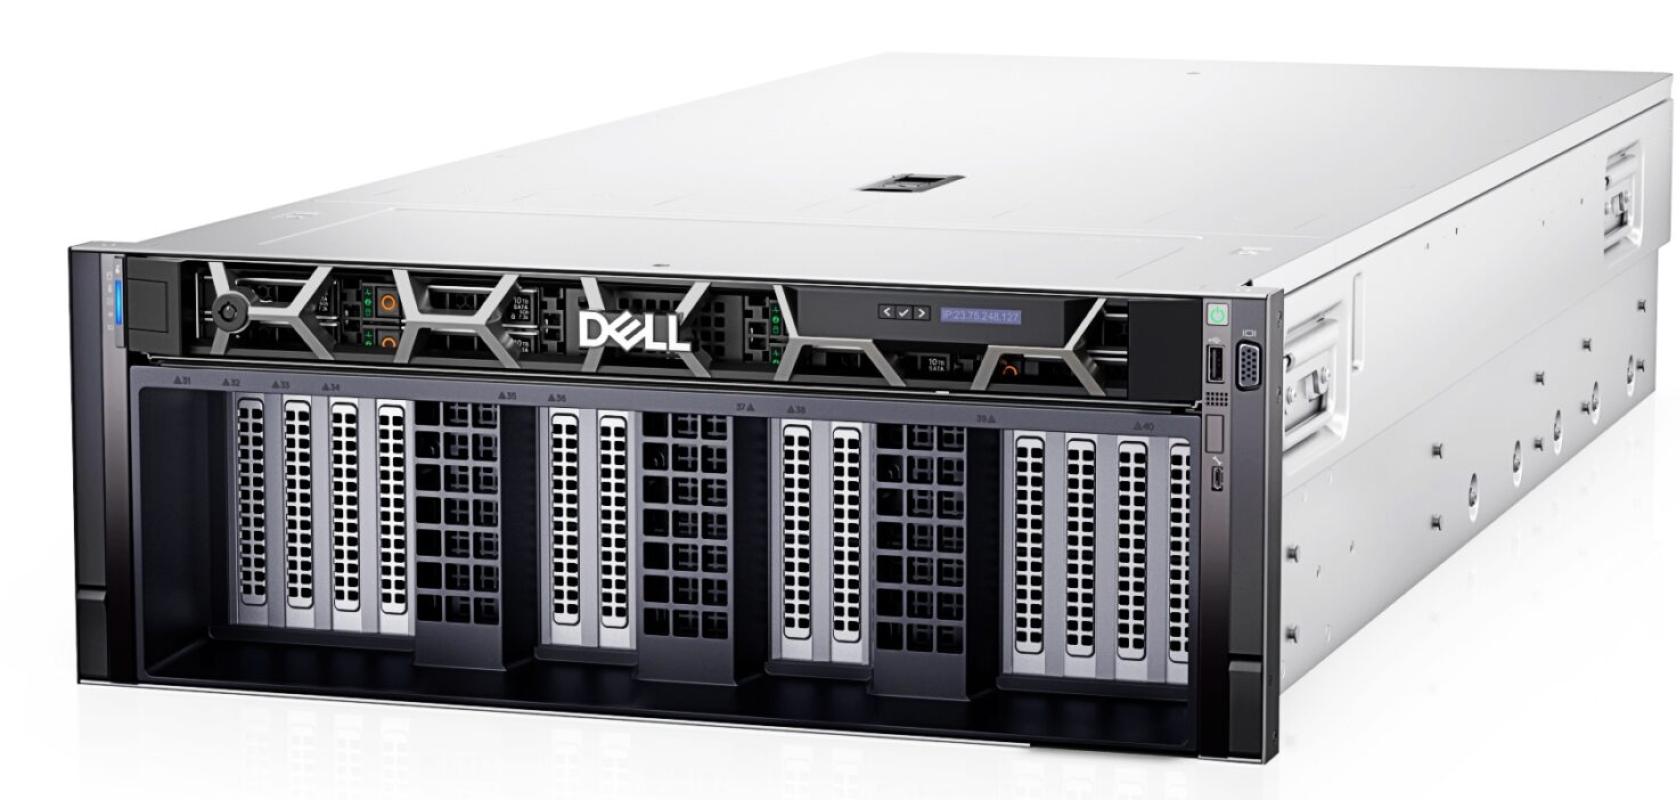 Dell PowerEdge-XE9680L server